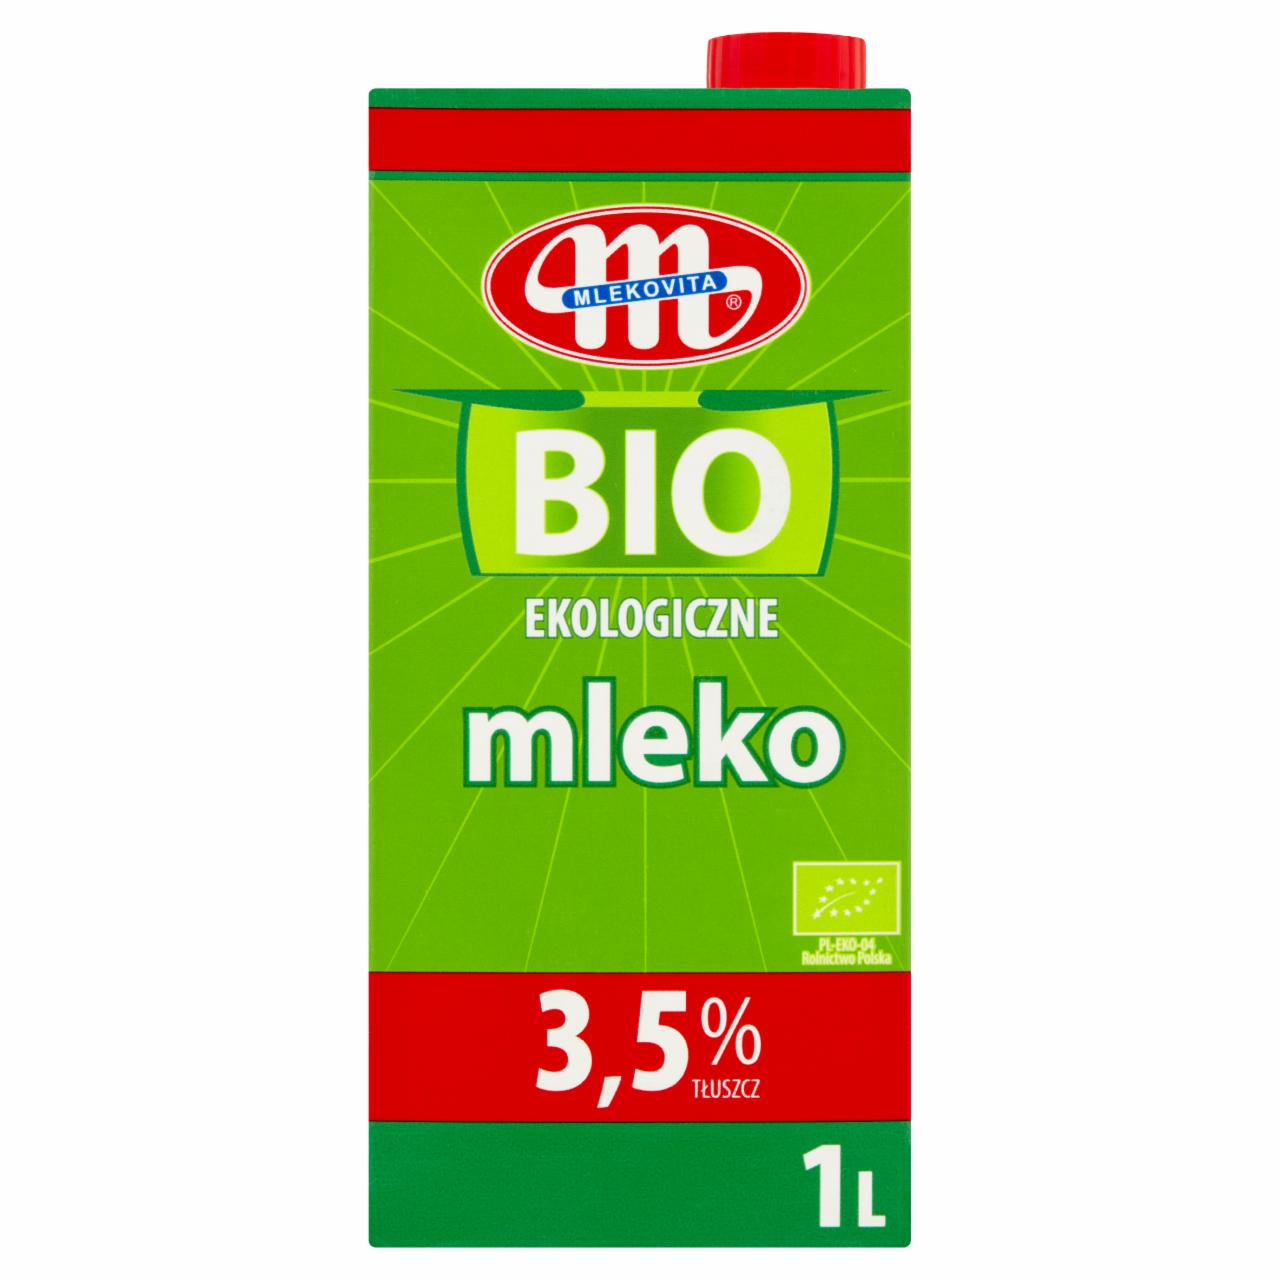 Zdjęcia - Mlekovita BIO Ekologiczne mleko 3,5% 1 l